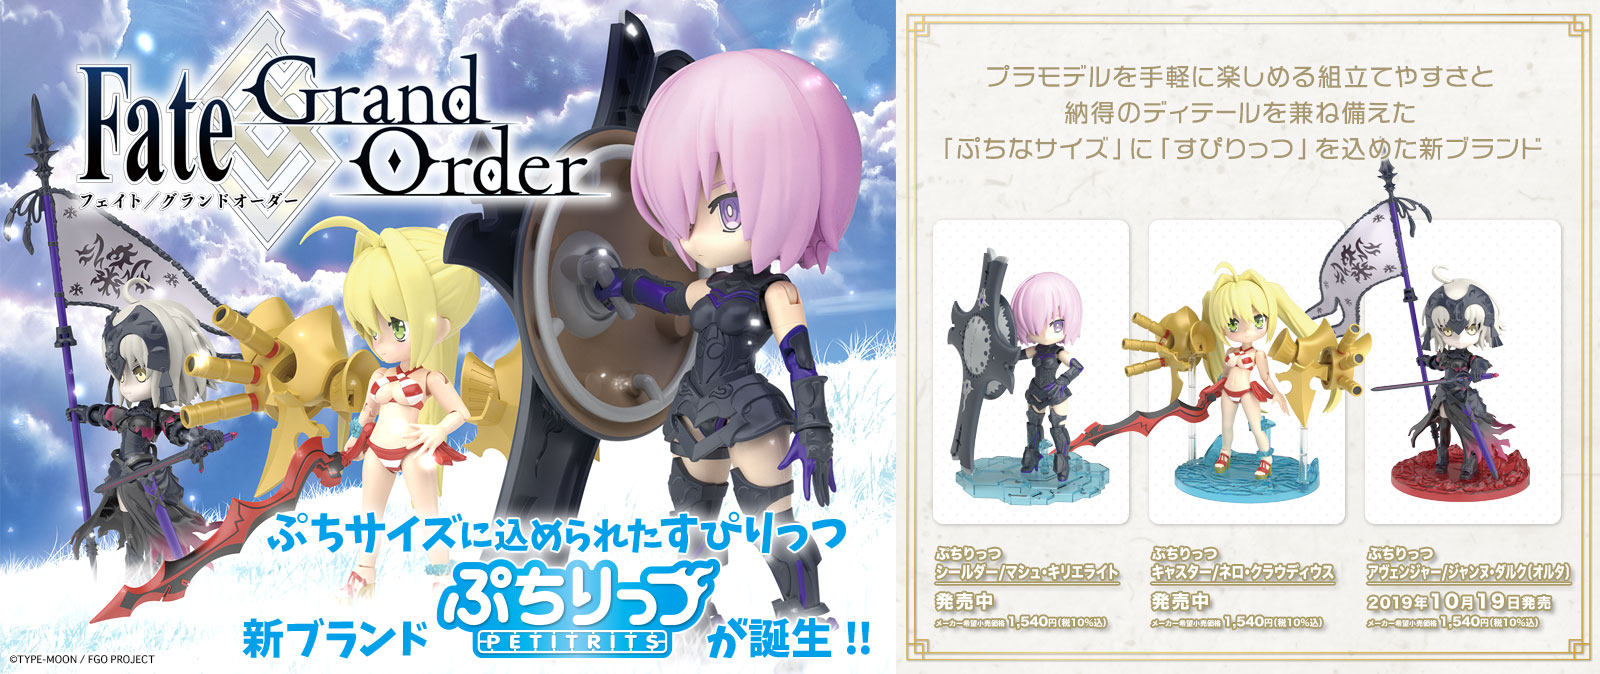 Fate Grand Order キャラクタープラモデル バンダイ ホビーサイト